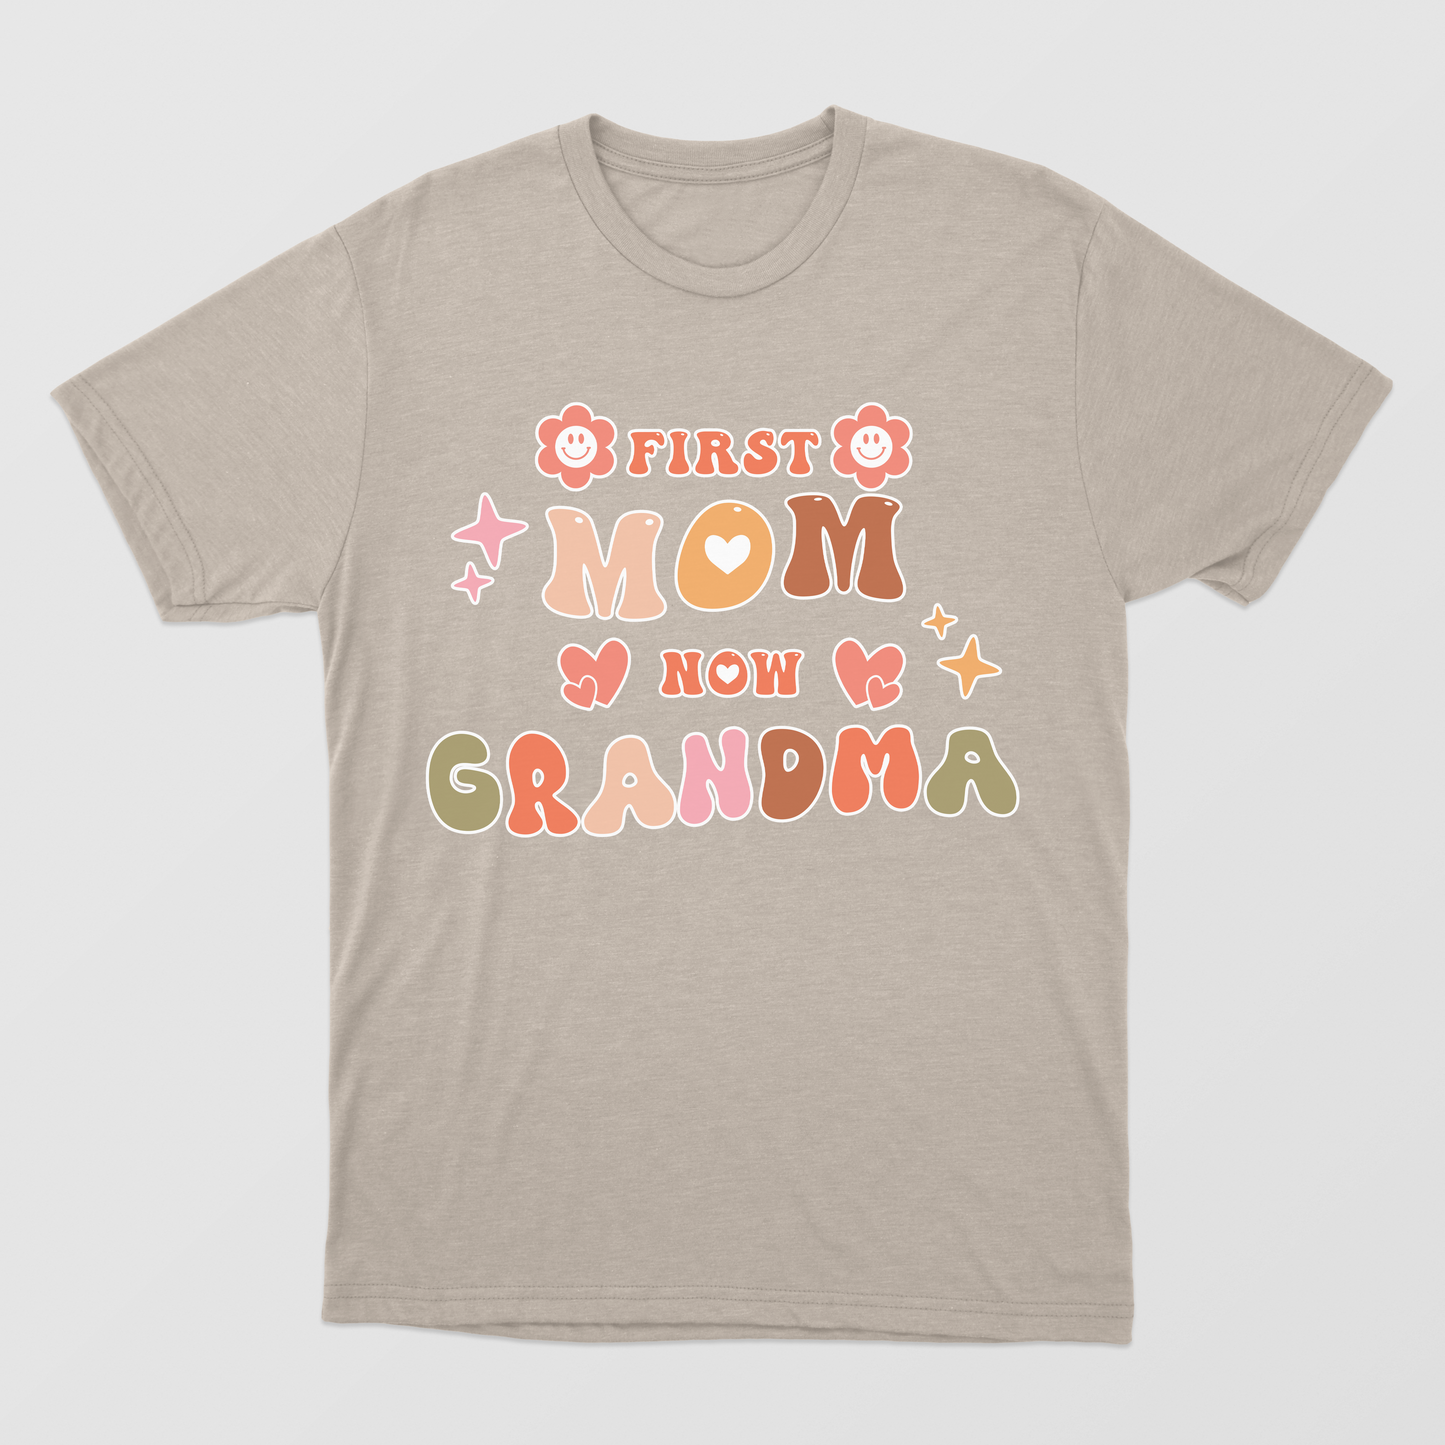 First Mom Now Grandma Shirt, New Grandma Shirt, Mom And Grandma Shirt, Mothers Day gift